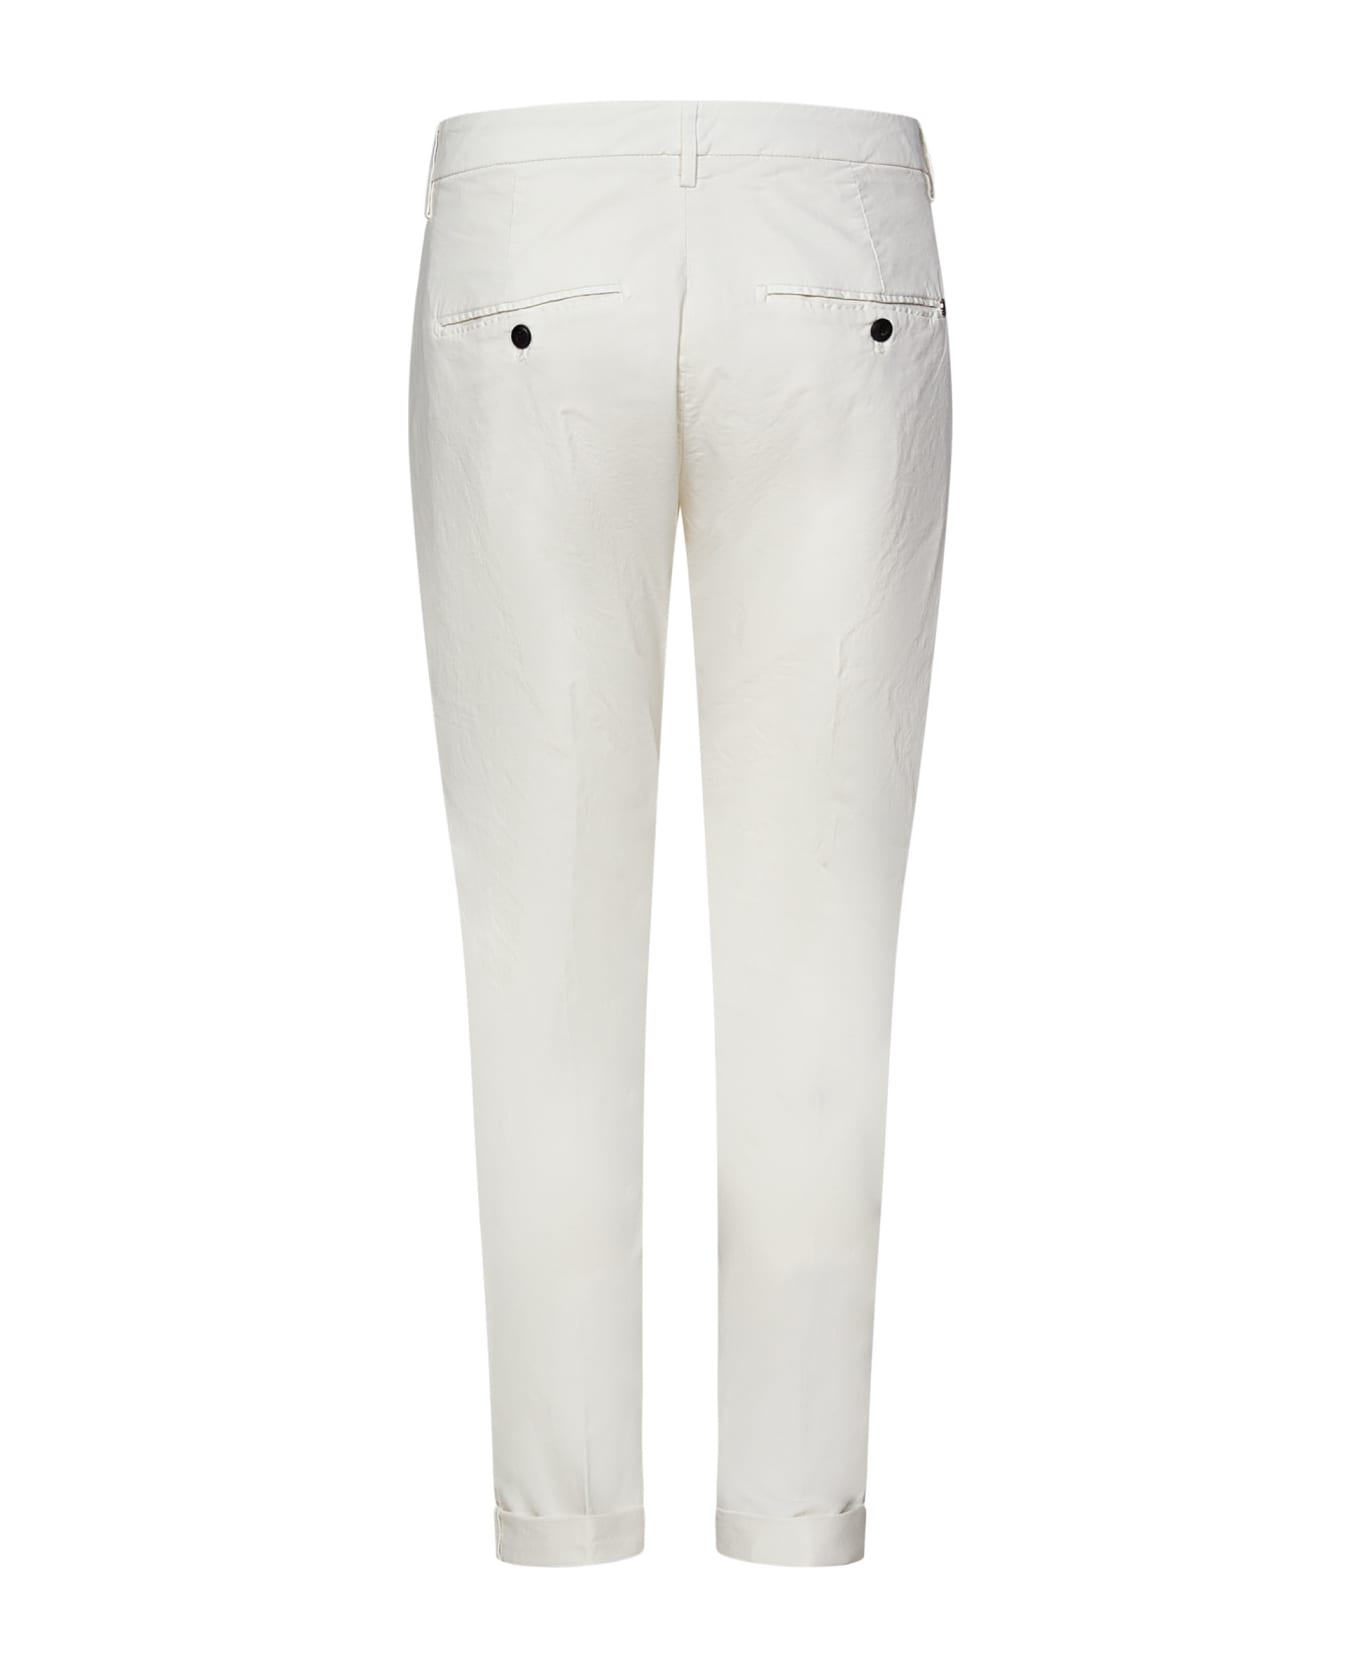 Dondup Gaubert Jeans - White デニム